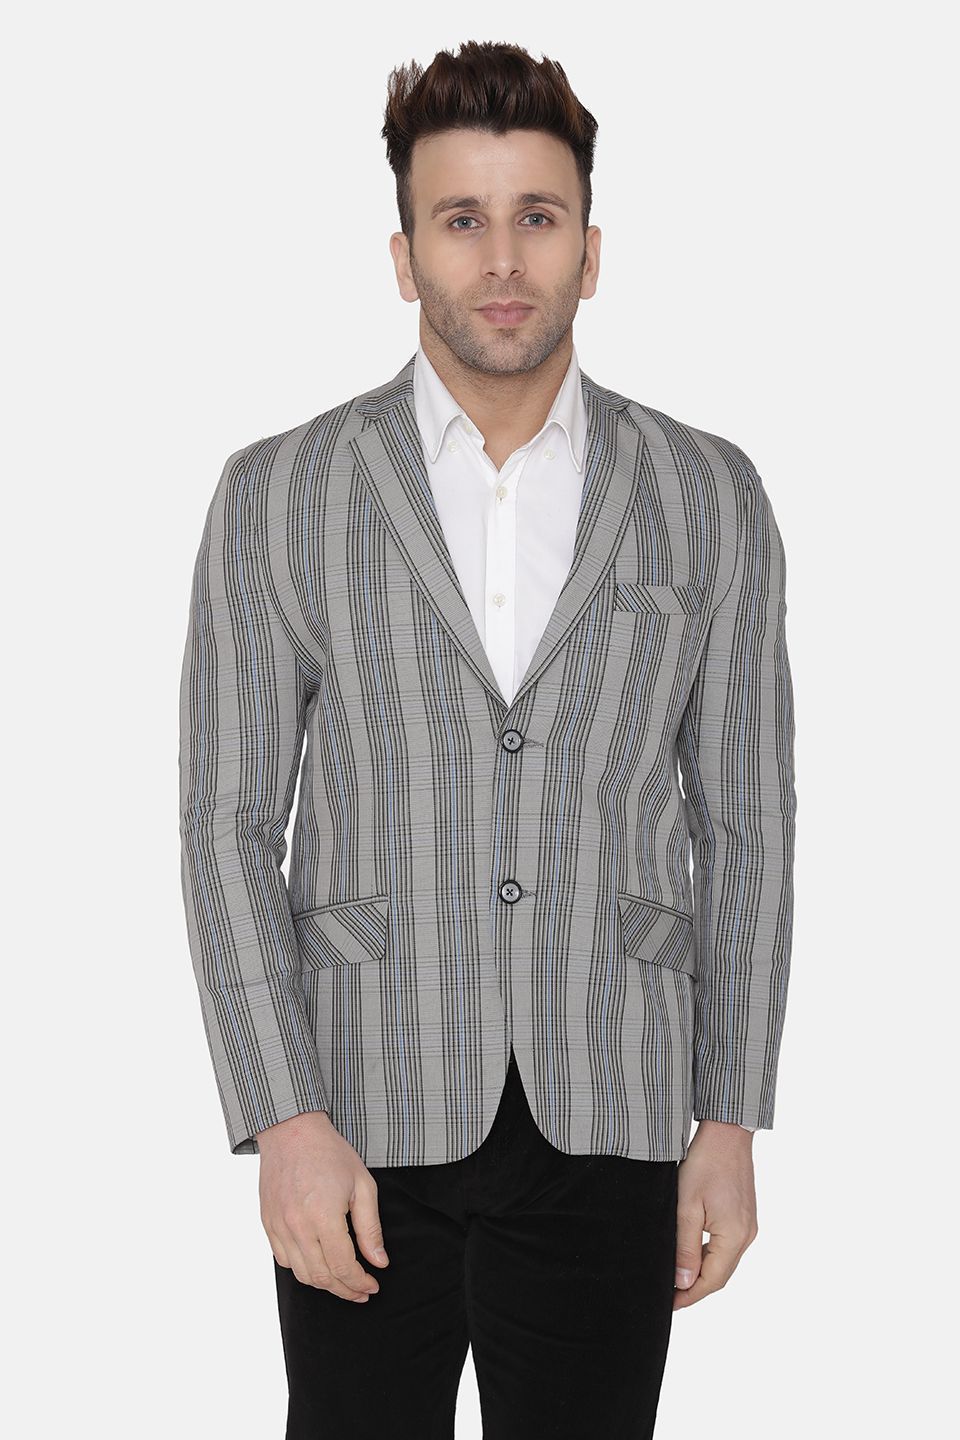 Wintage Men's Cotton Casual and Festive Blazer Coat Jacket : Silver